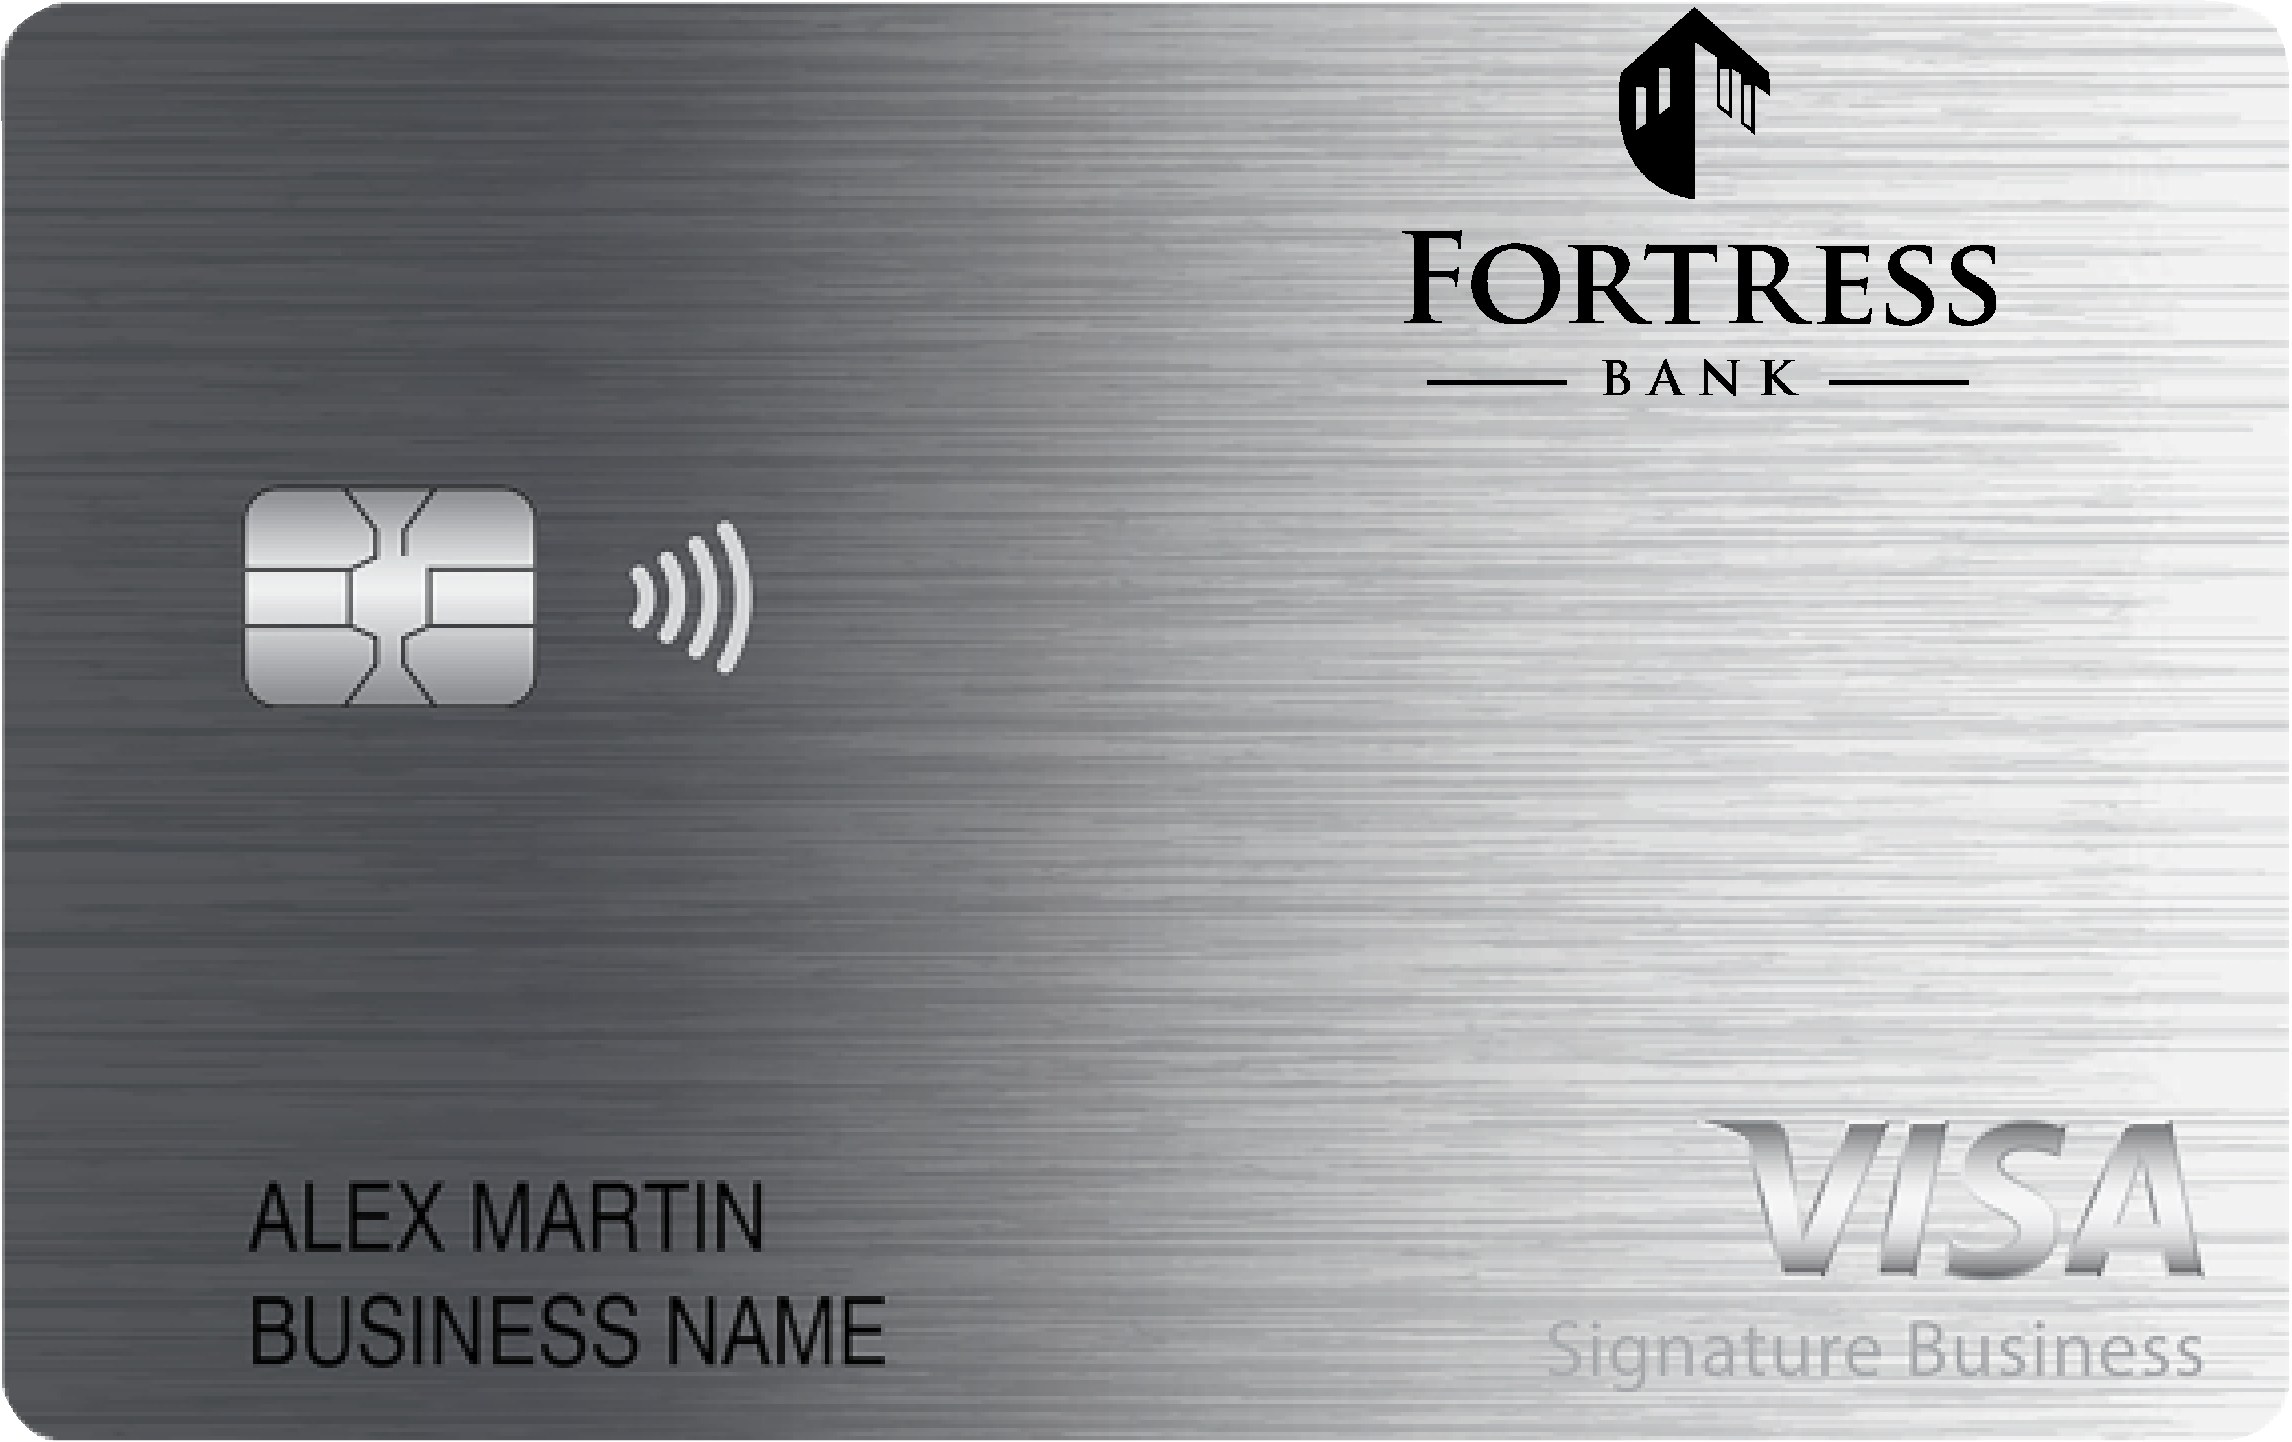 Fortress Bank Smart Business Rewards Card